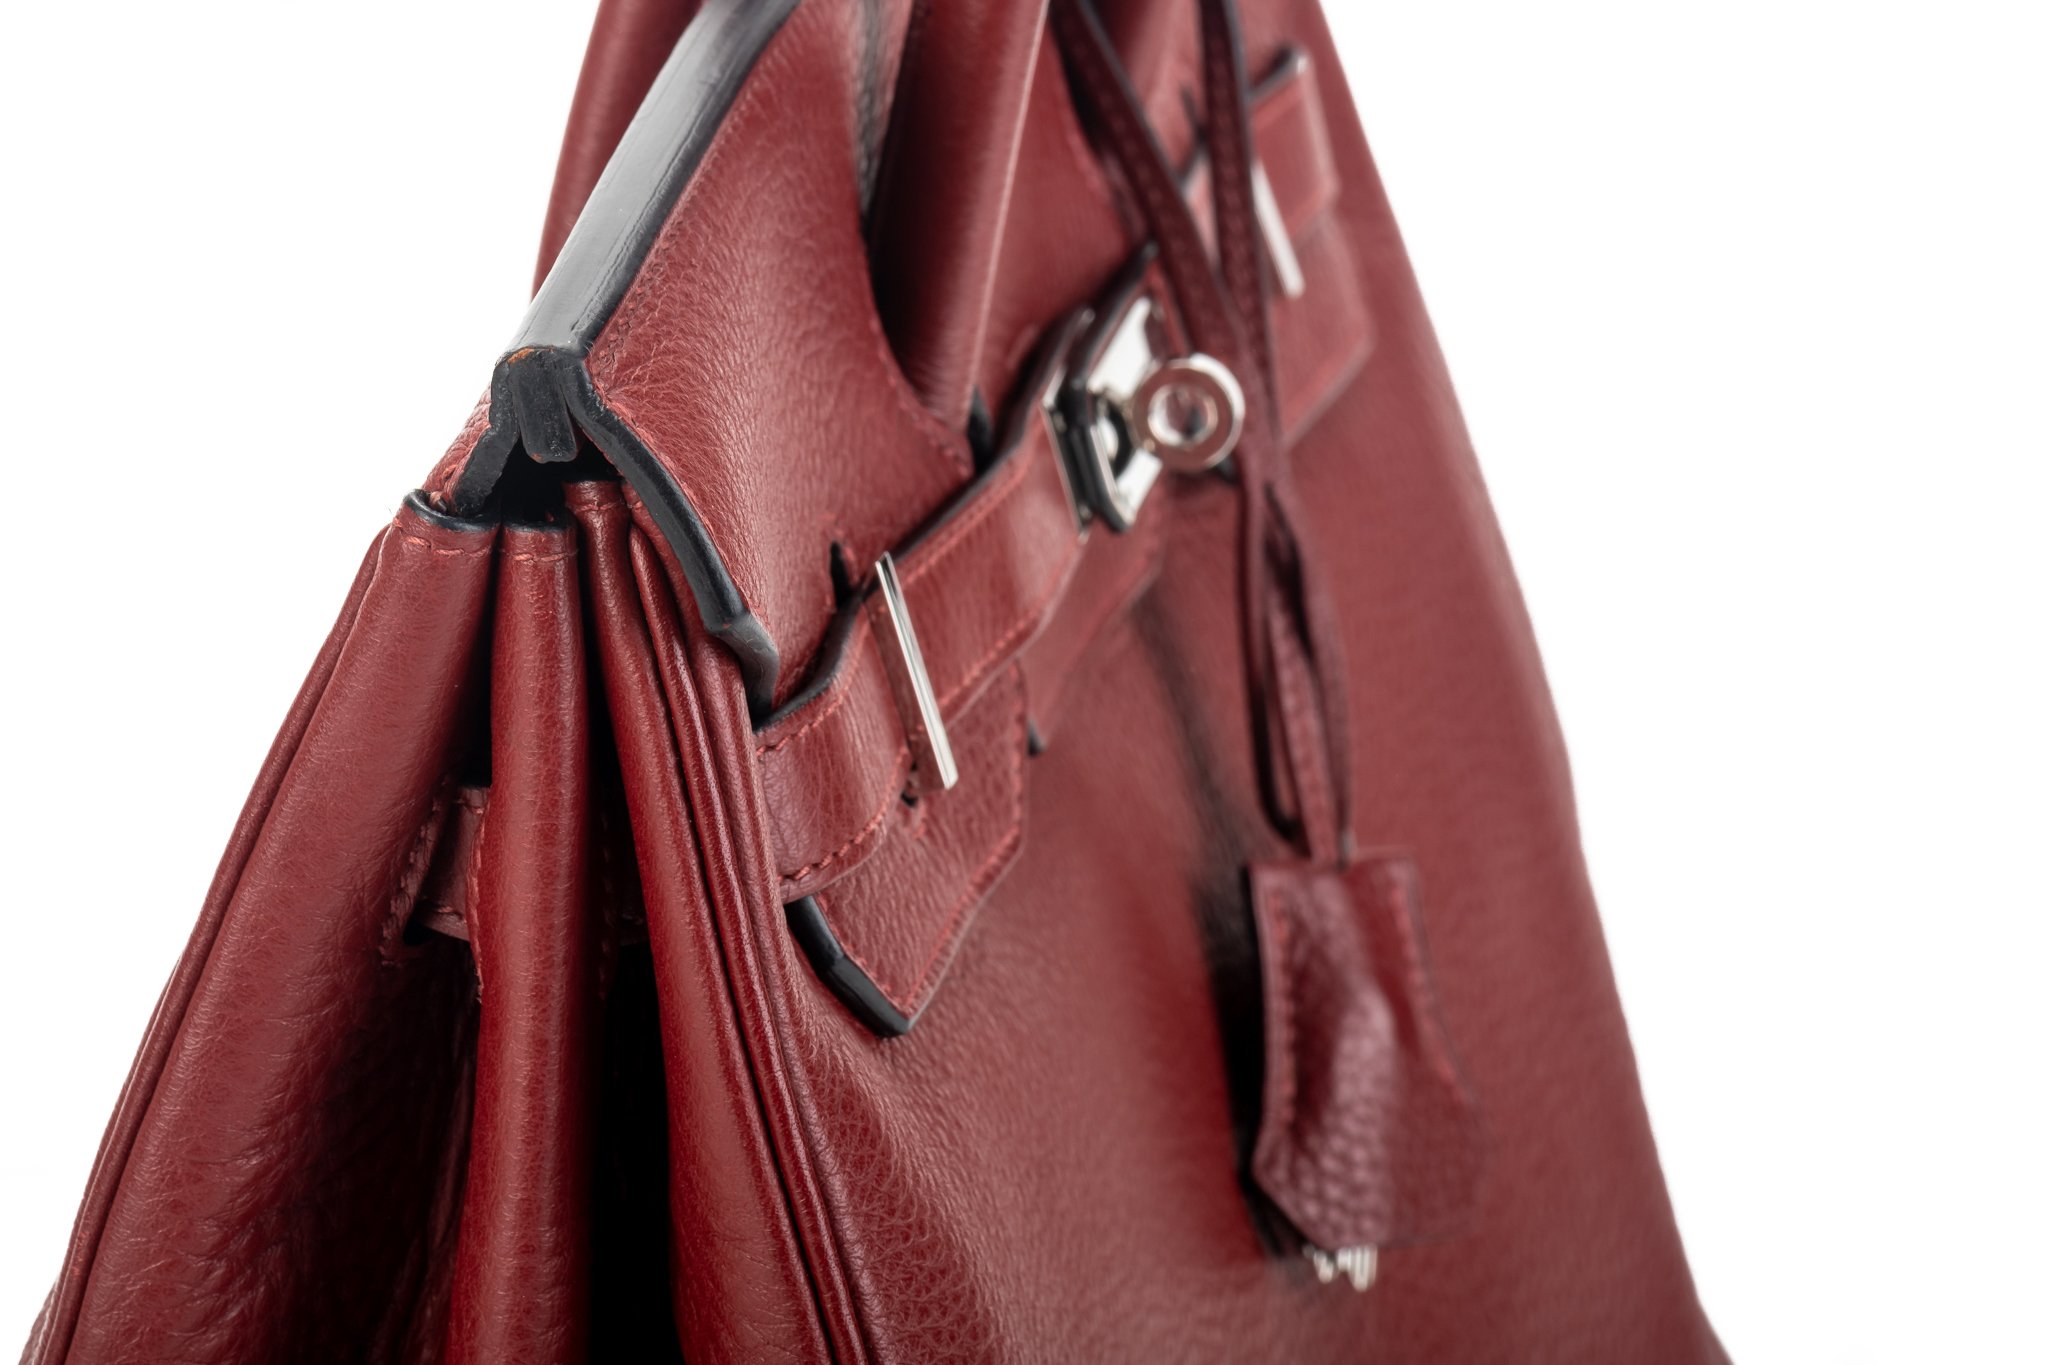 Hermes Clemence Leather Birkin Bag 35 Red